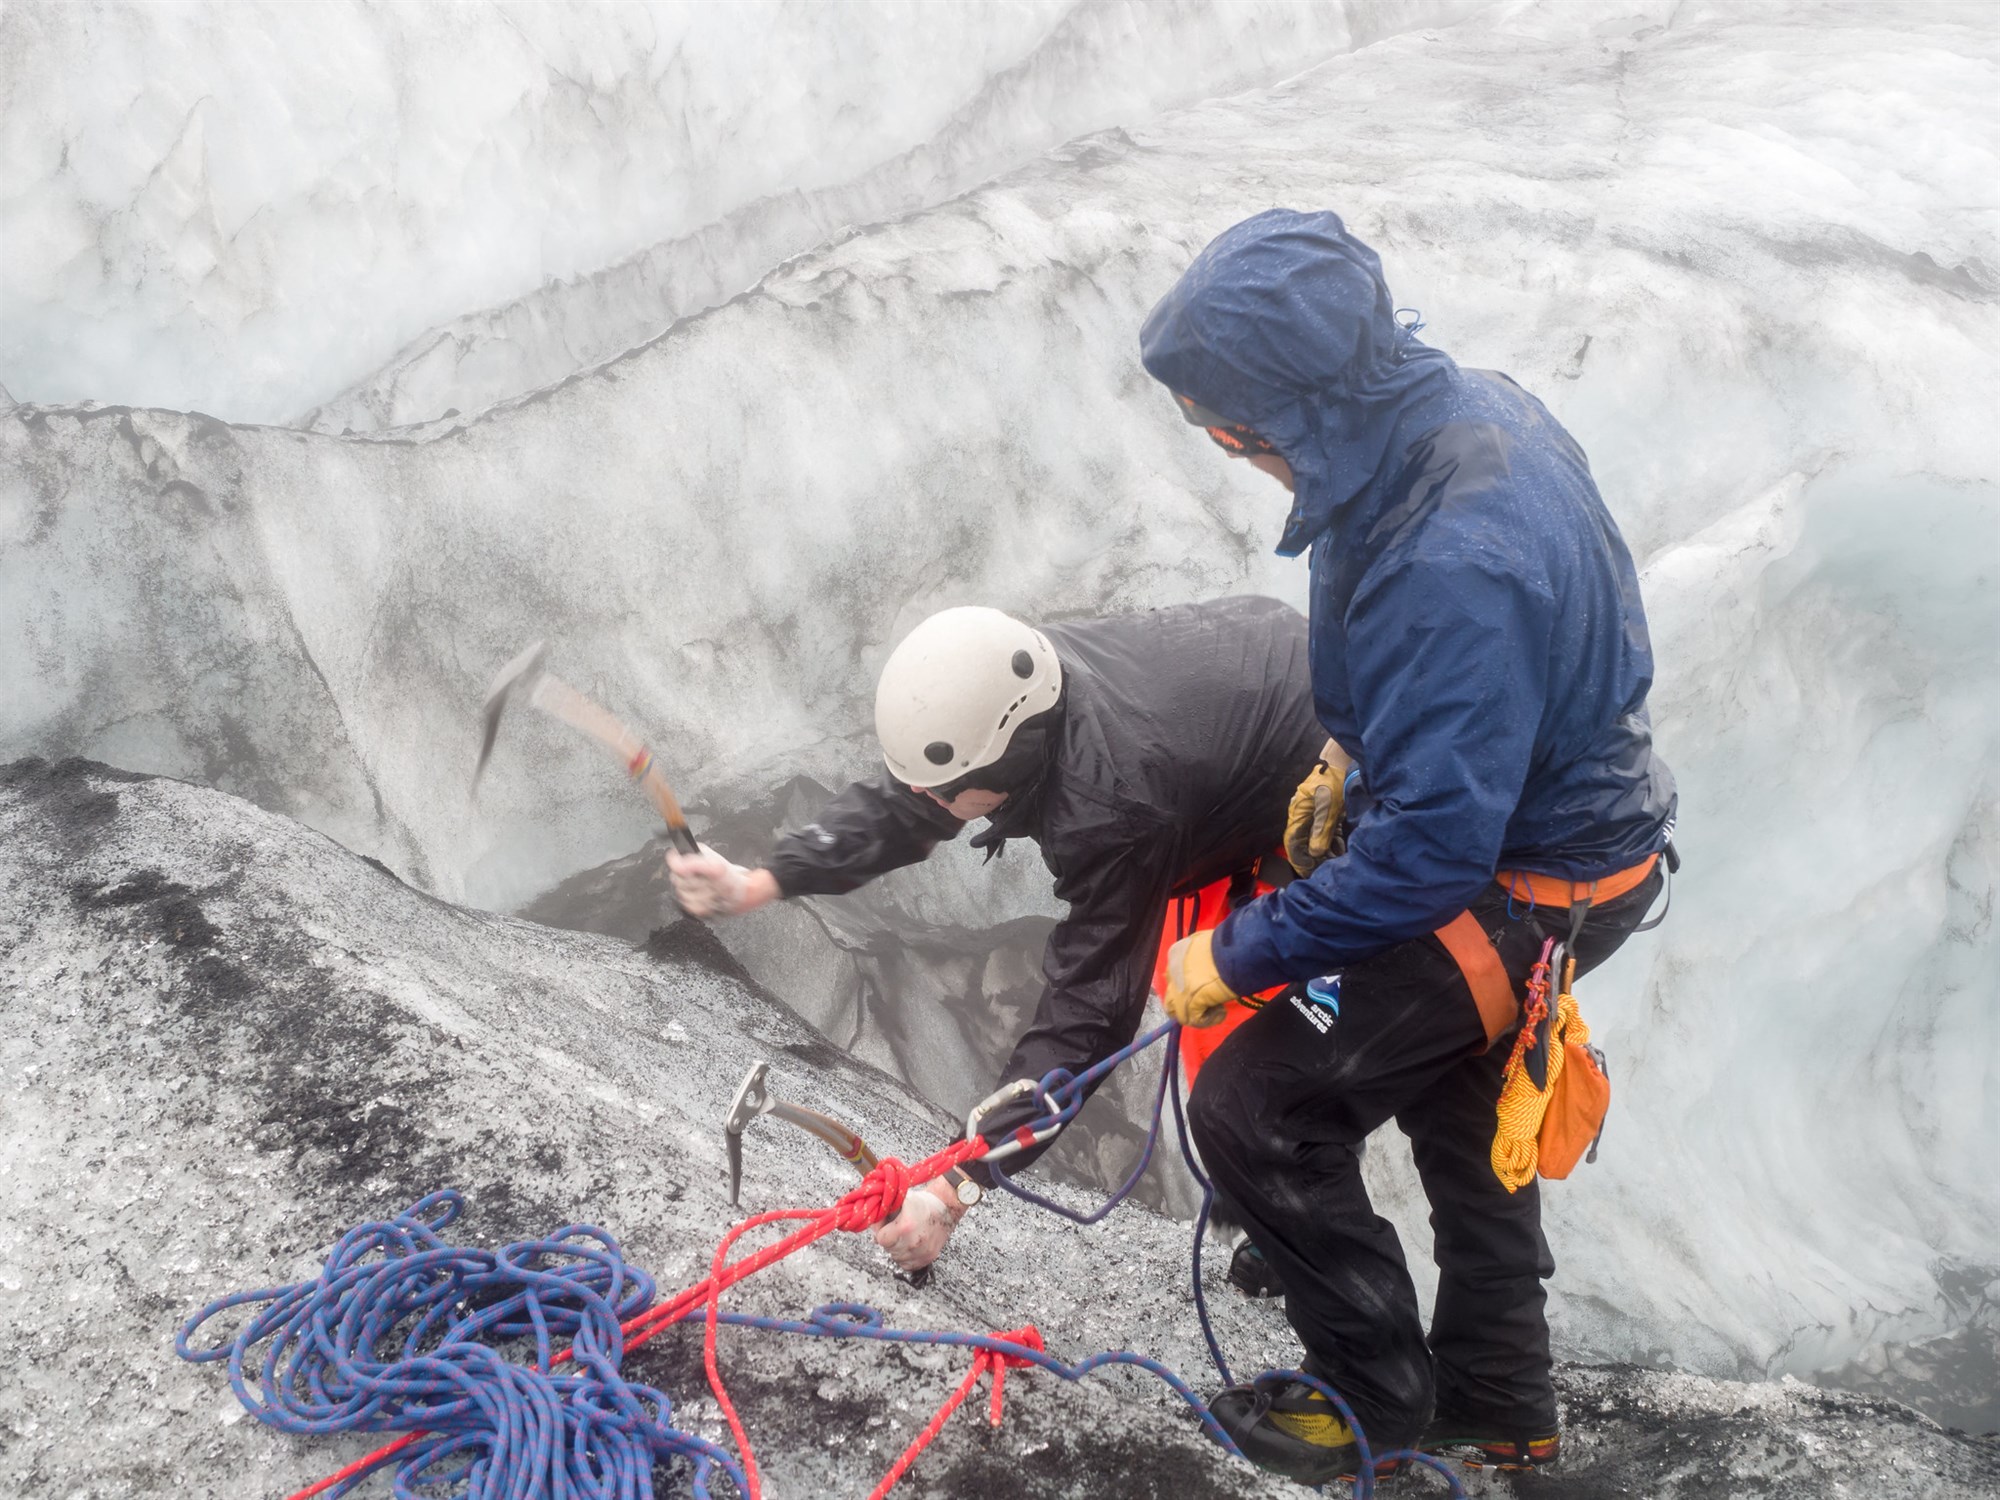 Ice climbing on an Icelandic glacier